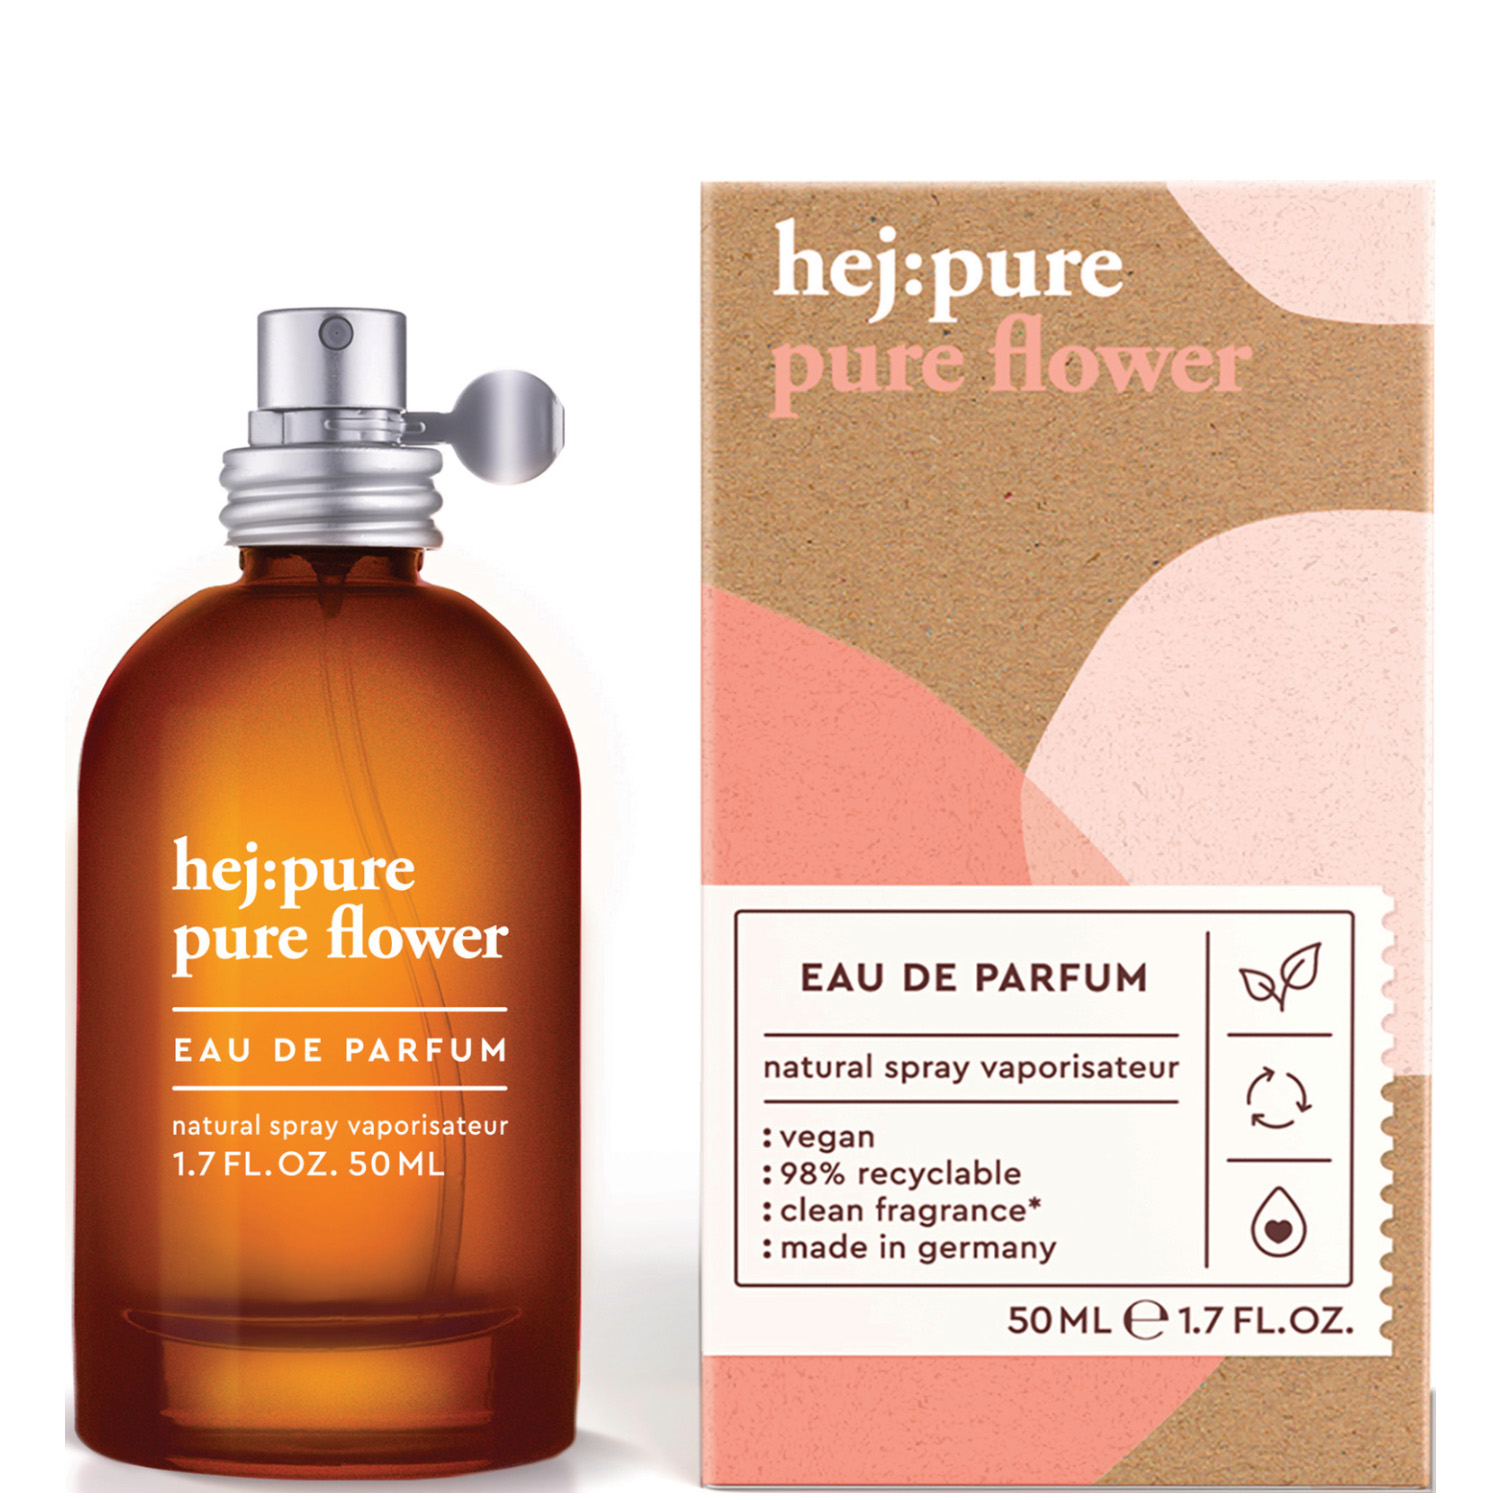 hej:pure Pure Flower Eau de Parfum 50ml